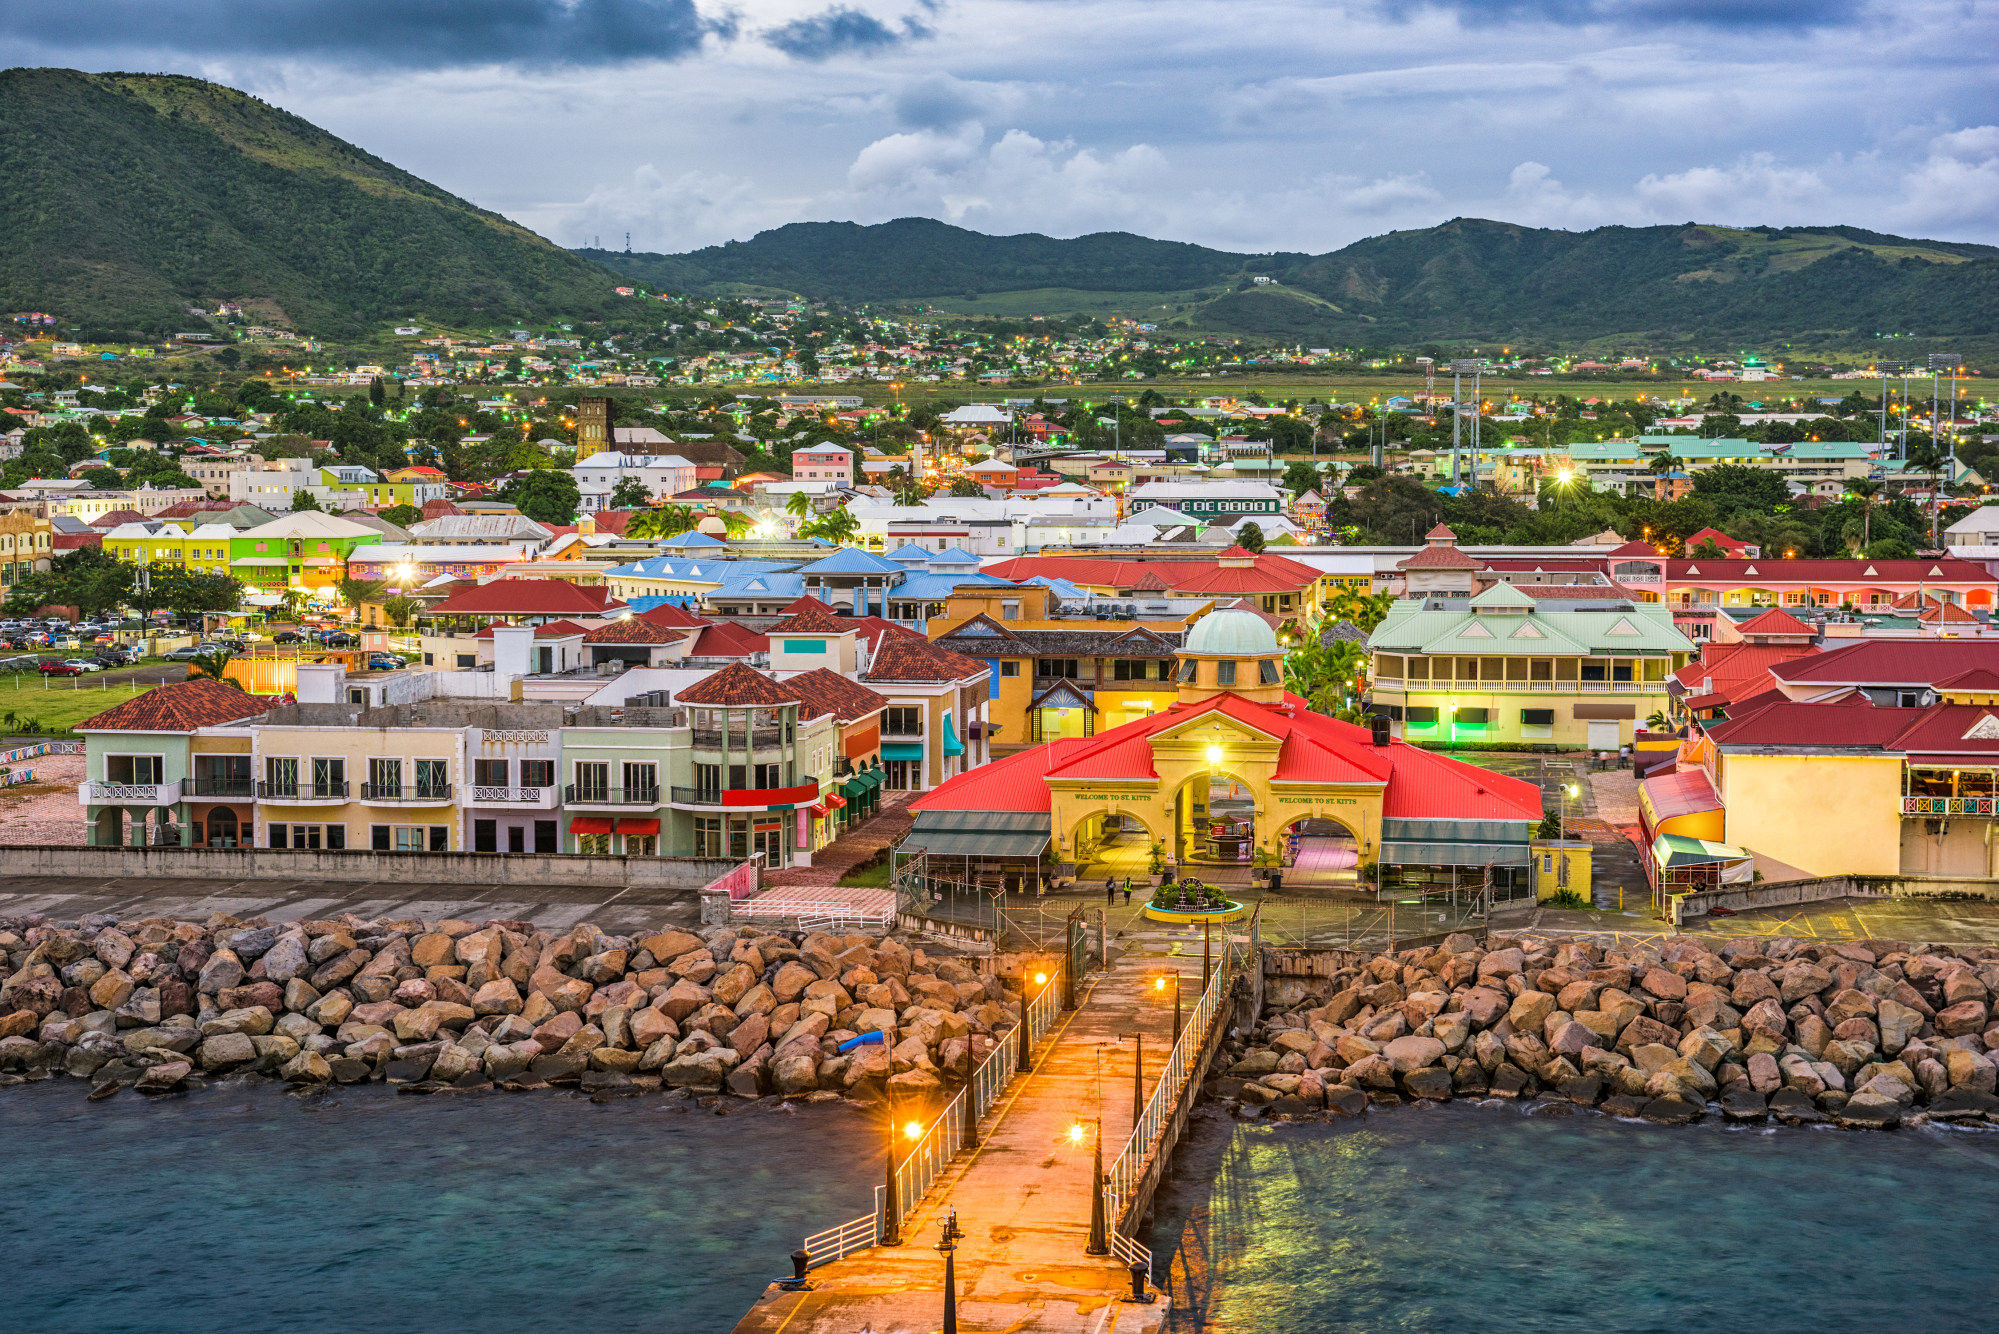 The Basseterre skyline in Saint Kitts and Nevis. Photo: Shutterstock